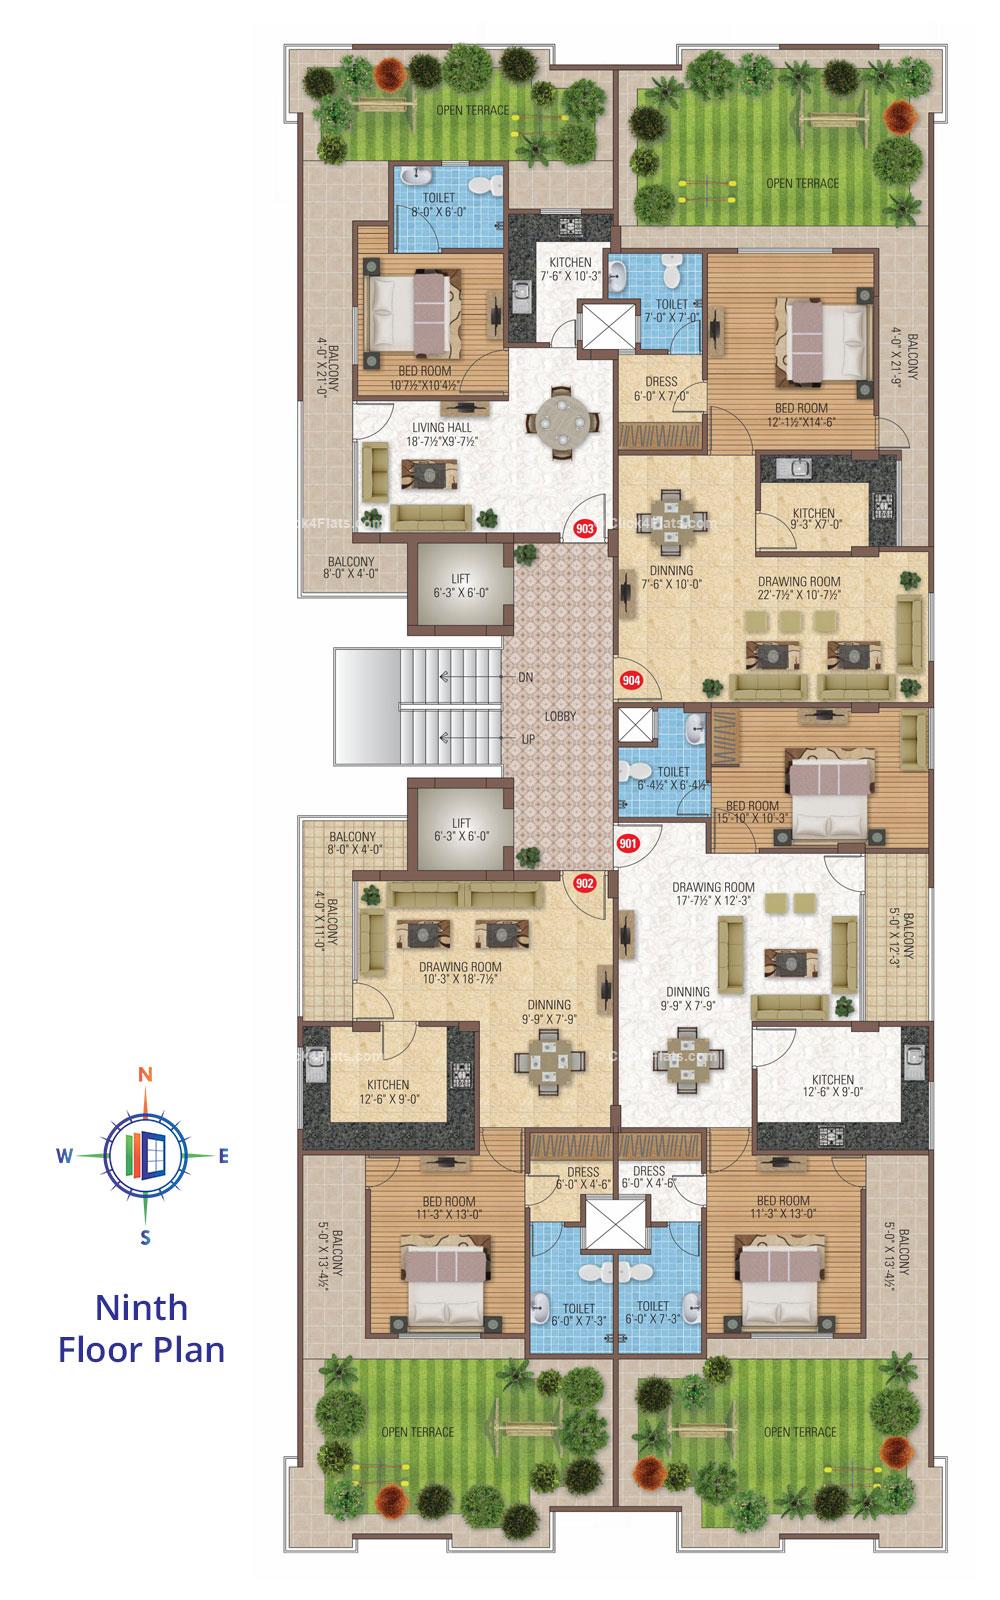 SDC Aishwarya Heights Ninth Floor Plan